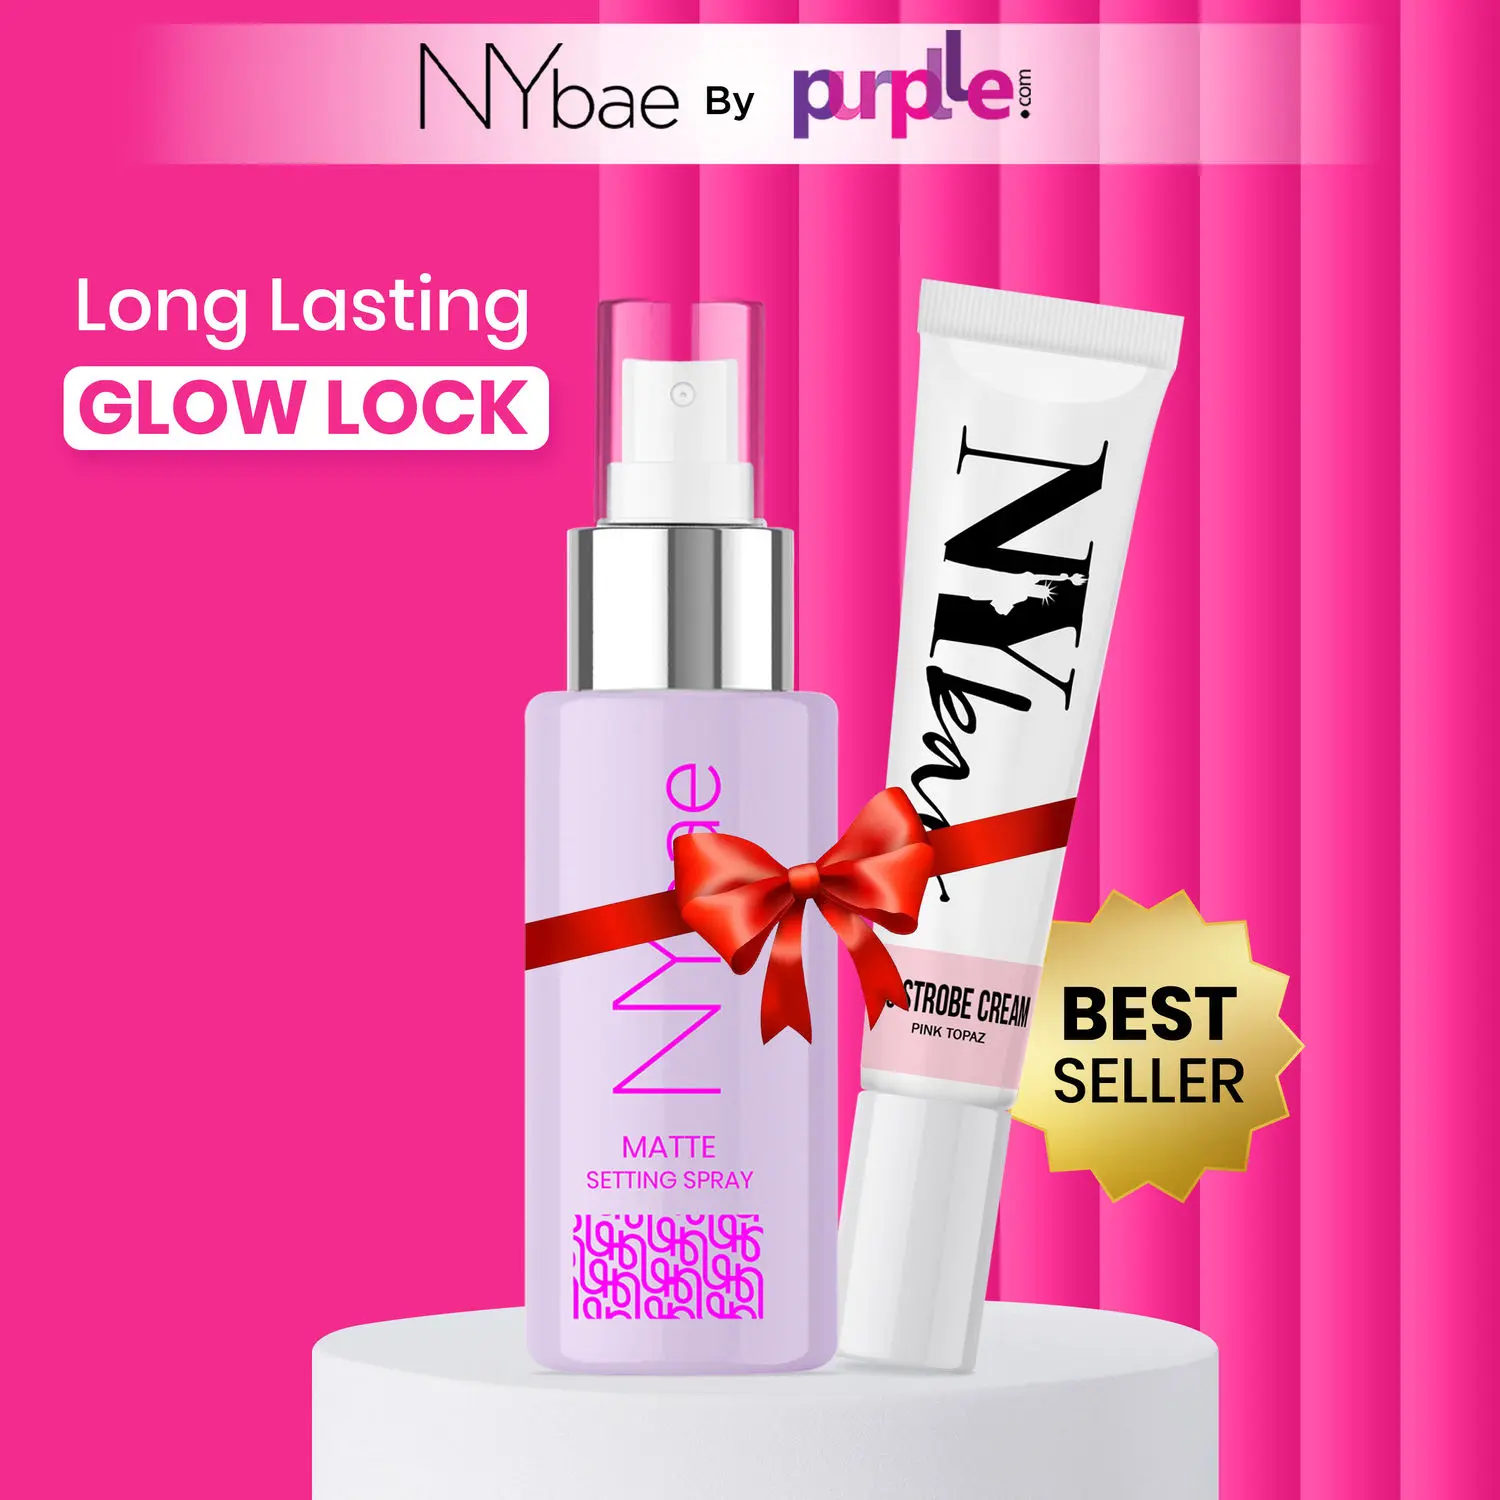 NYbae Long Lasting Glow Lock | Pink Strobe Cream | Matte Setting Spray | Glowing Korean Skin | Green Tea Infused | NYbae Makeup Kit | Glow Combo